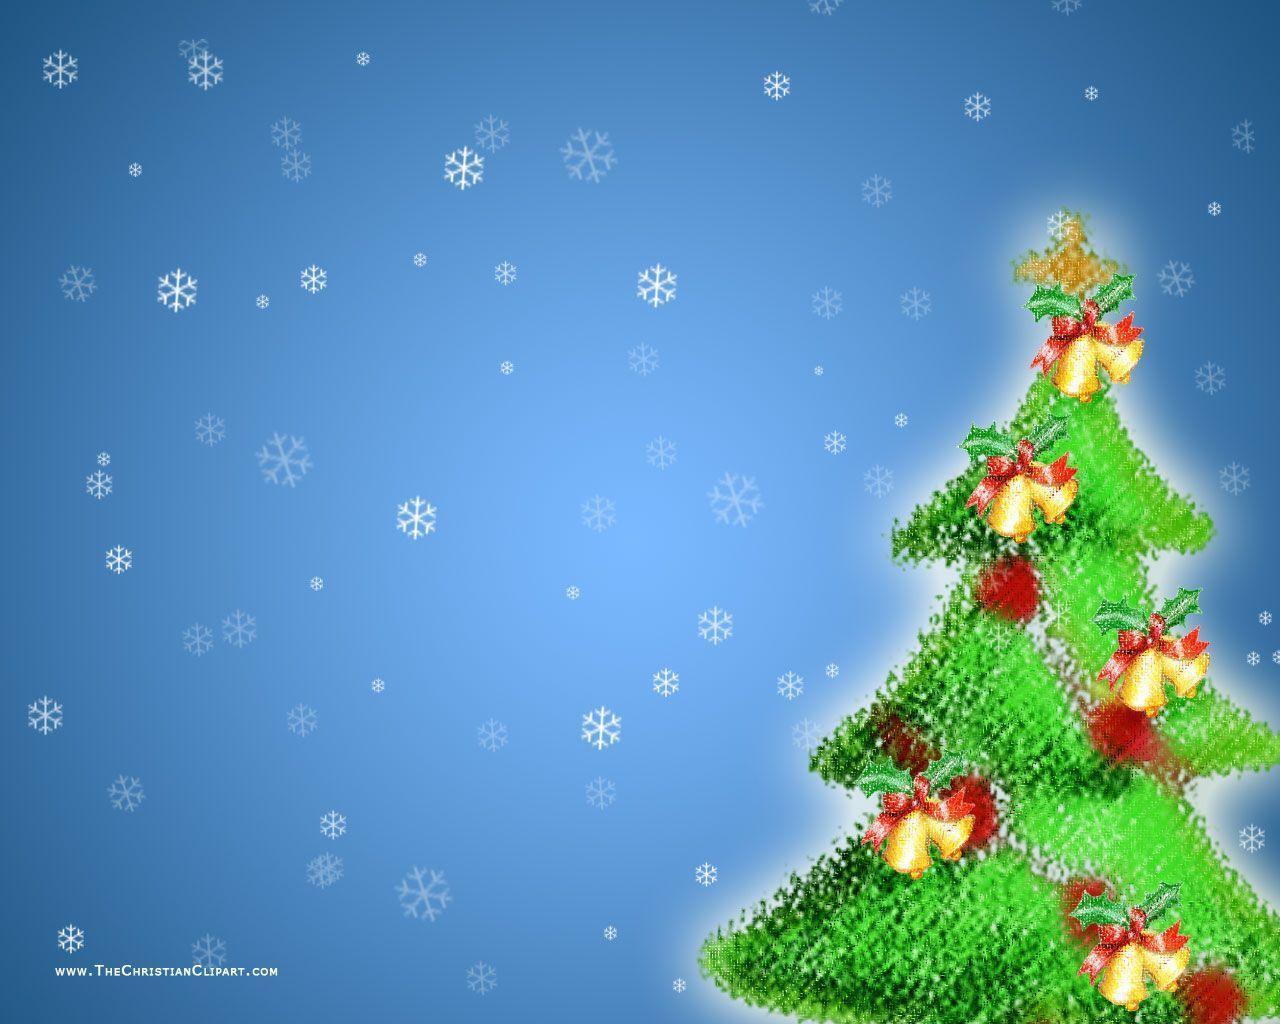 Christmas Background Image desktop wallpaper 800x Christmas